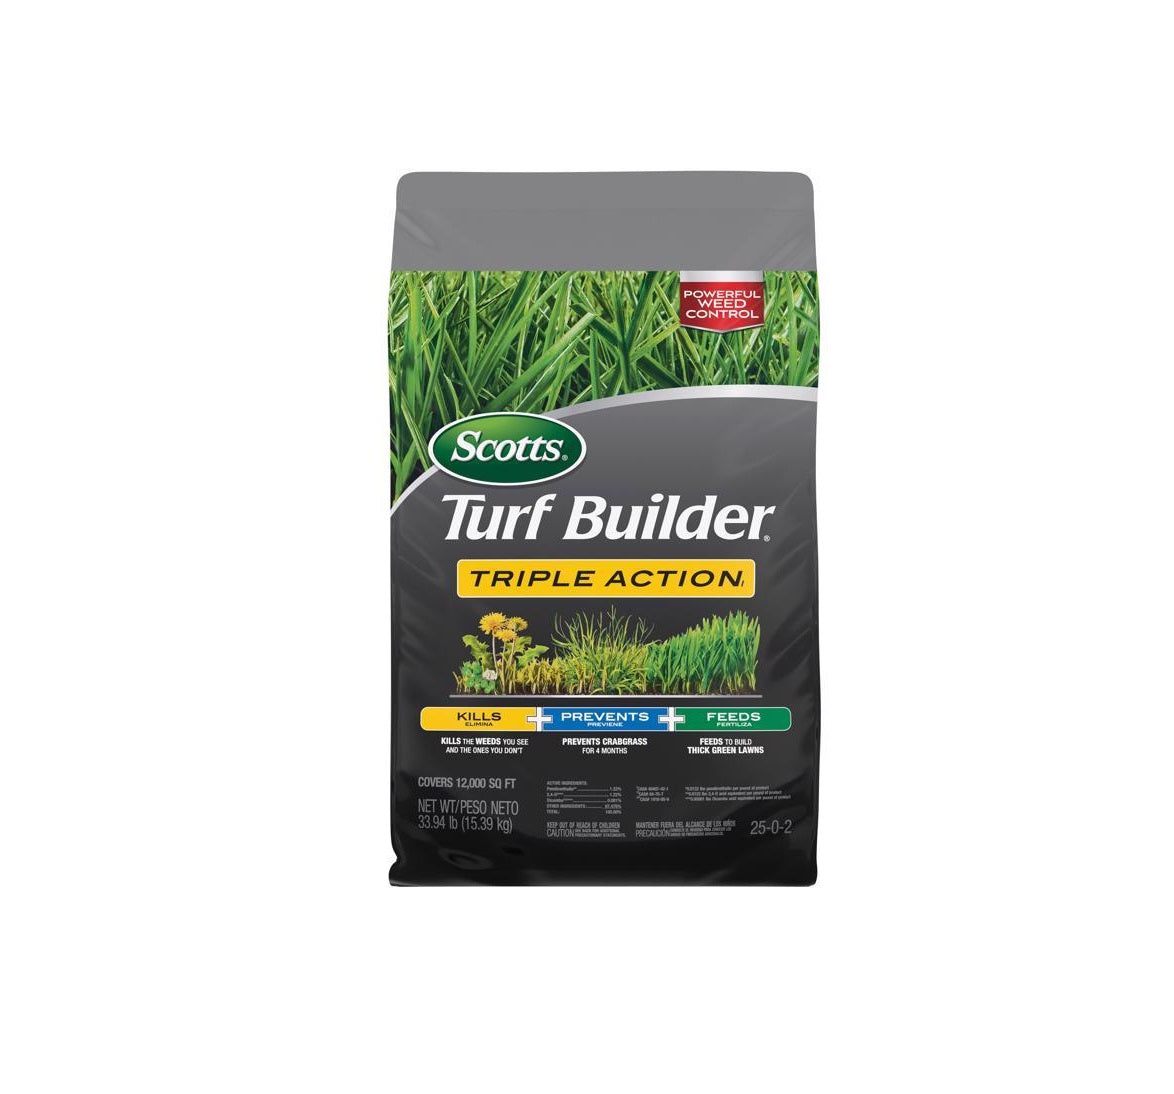 Scotts 26019 Turf Builder Lawn Fertilizer, 12000 sq ft